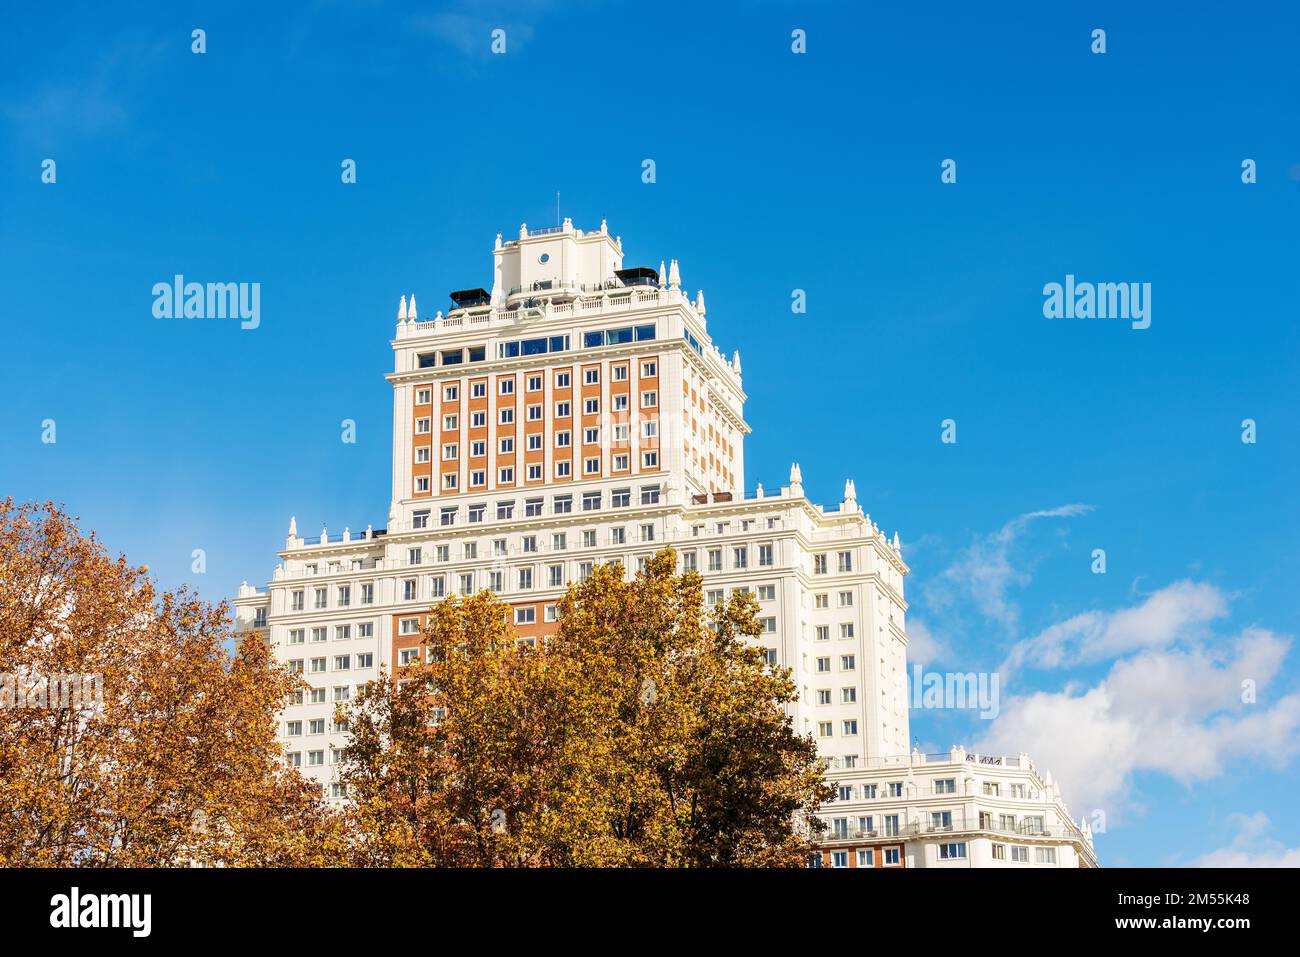 Madrid downtown. Facade of the skyscraper in Plaza de Espana called Edificio de Espana (Spain Building), 1948-1953 in neo-Baroque style. Spain, Europe Stock Photo